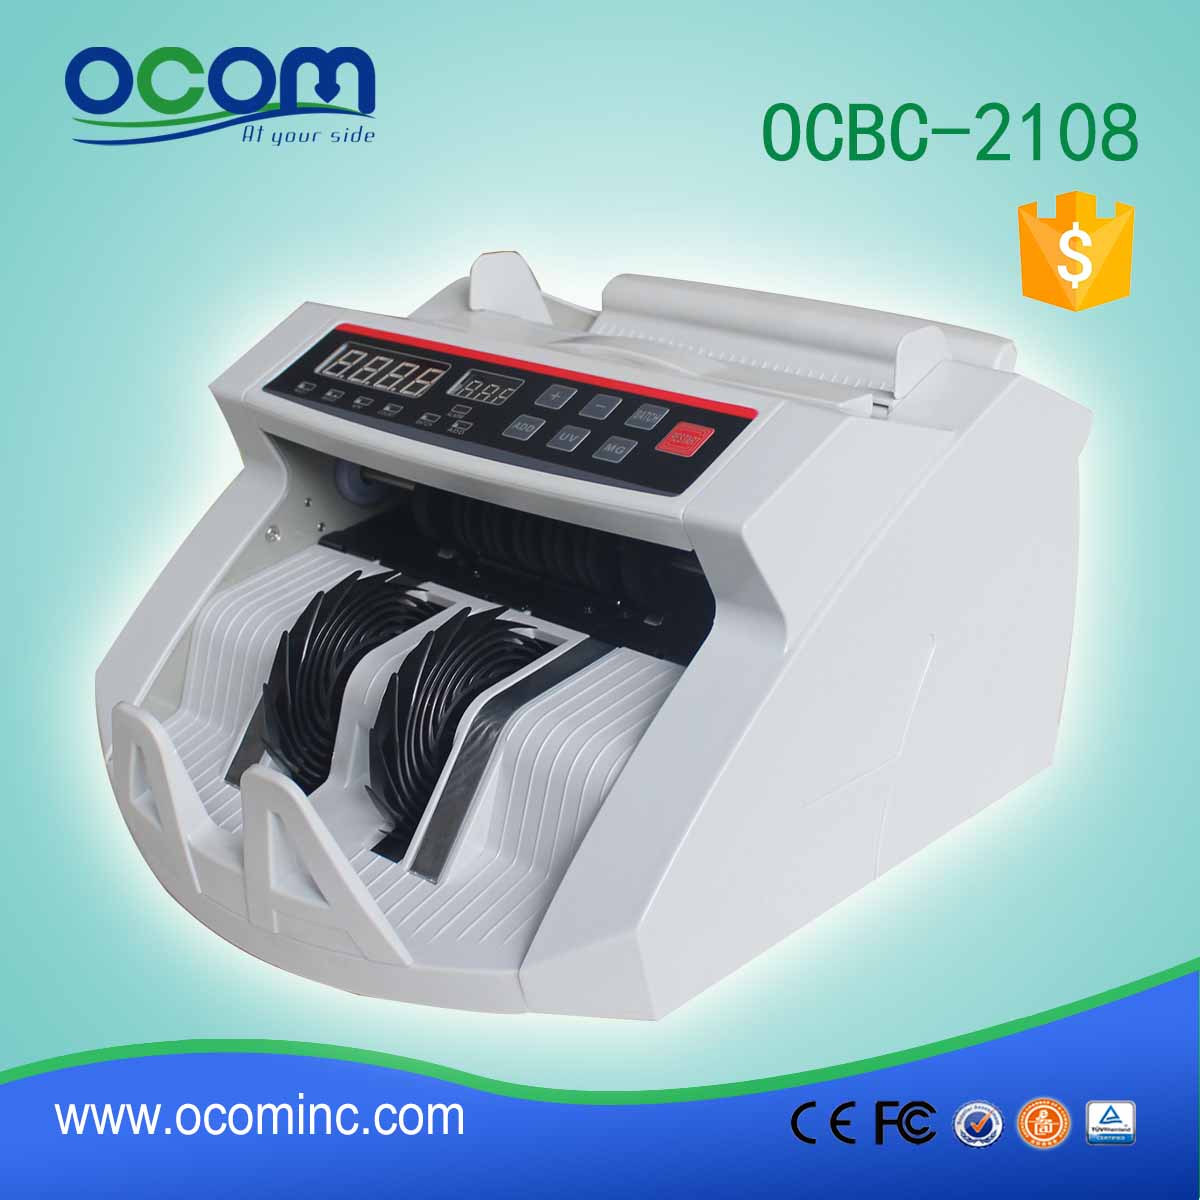 Электронный счетчик денег OCBC-2108 со светодиодным дисплеем